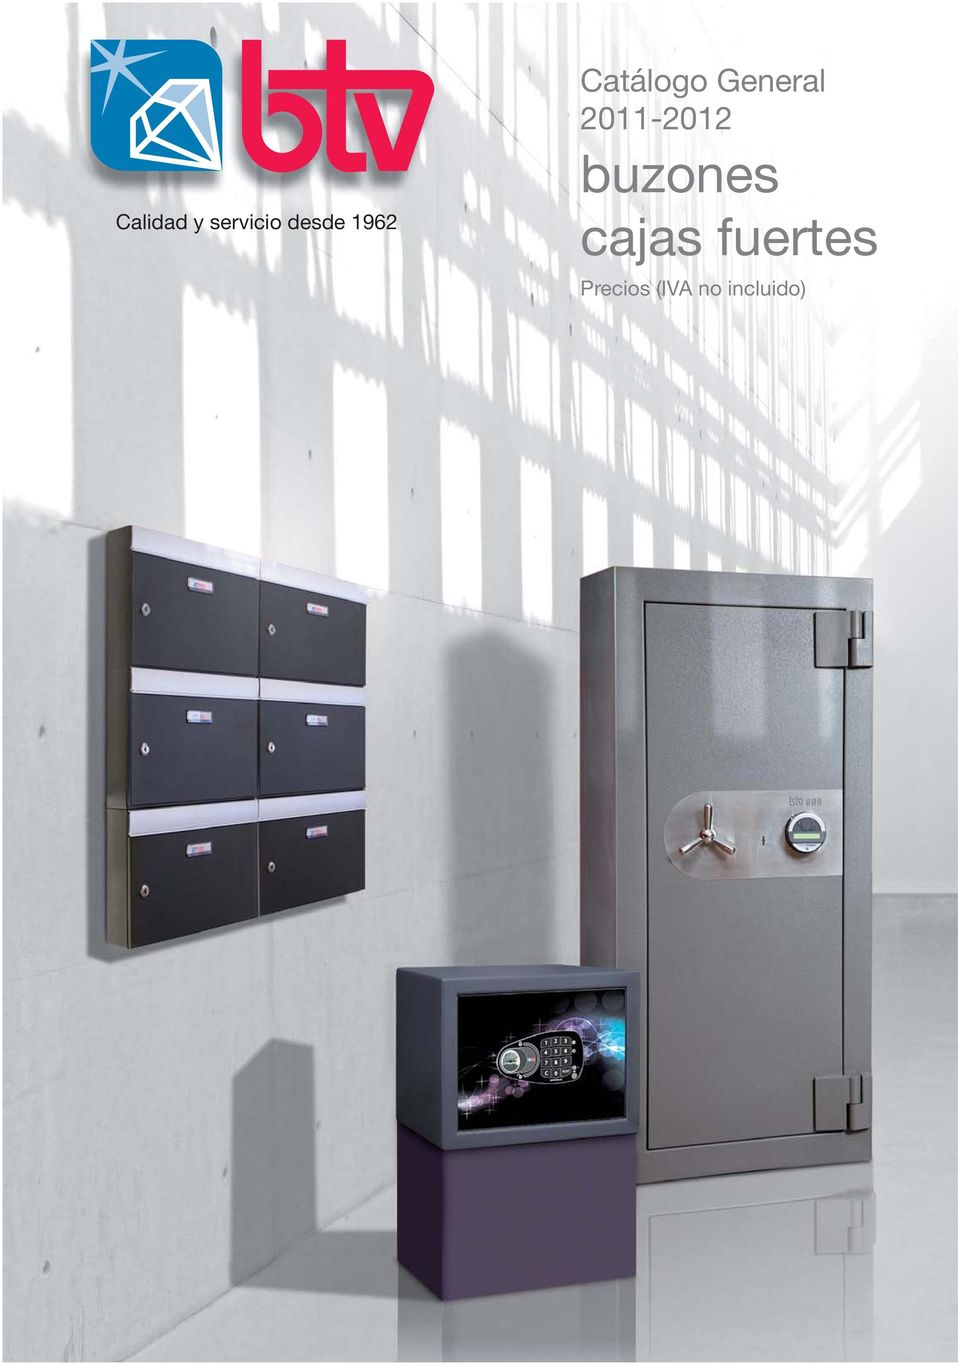 2011-2012 buzones cajas